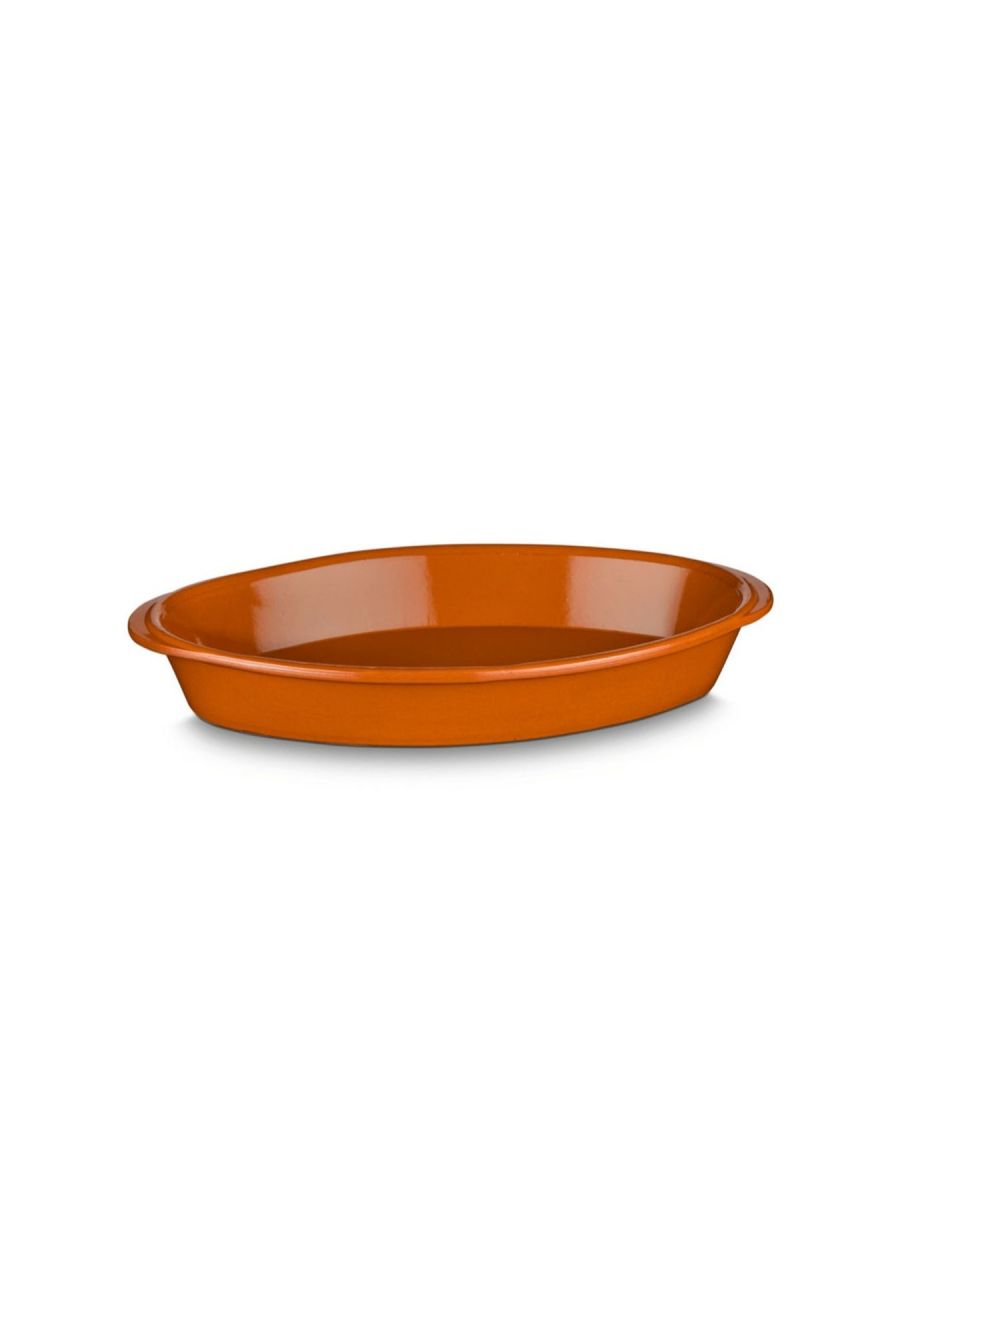 Regas Oval Dish #502 -BACPL87002